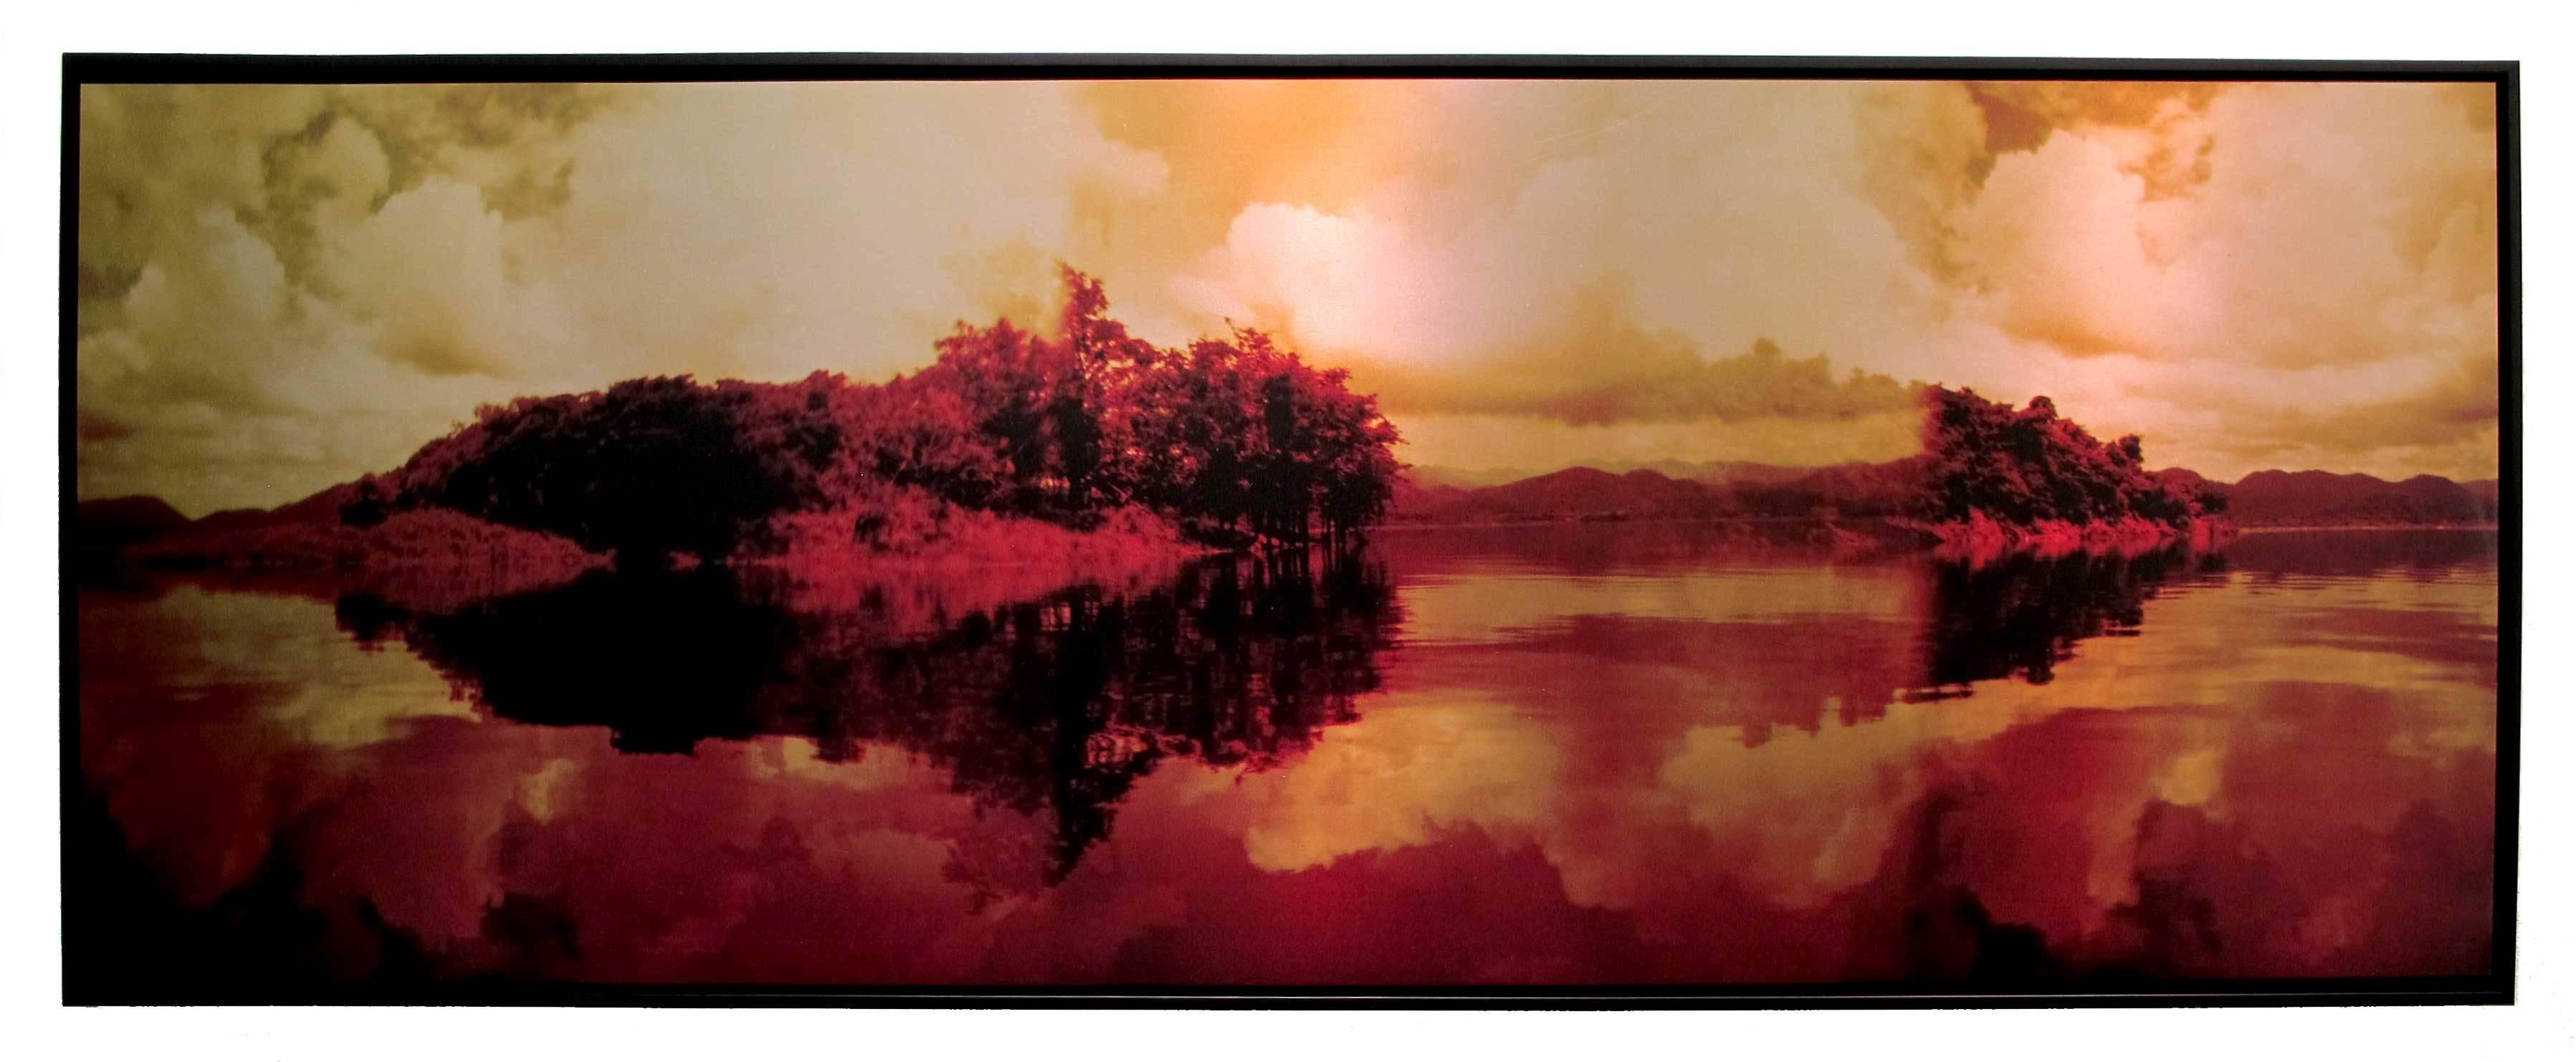 Hugo Garcia-Urrutia Landscape Photograph - Fifi Clouds Red by Hugo G. Urrutia - mixed media photo on metal framed